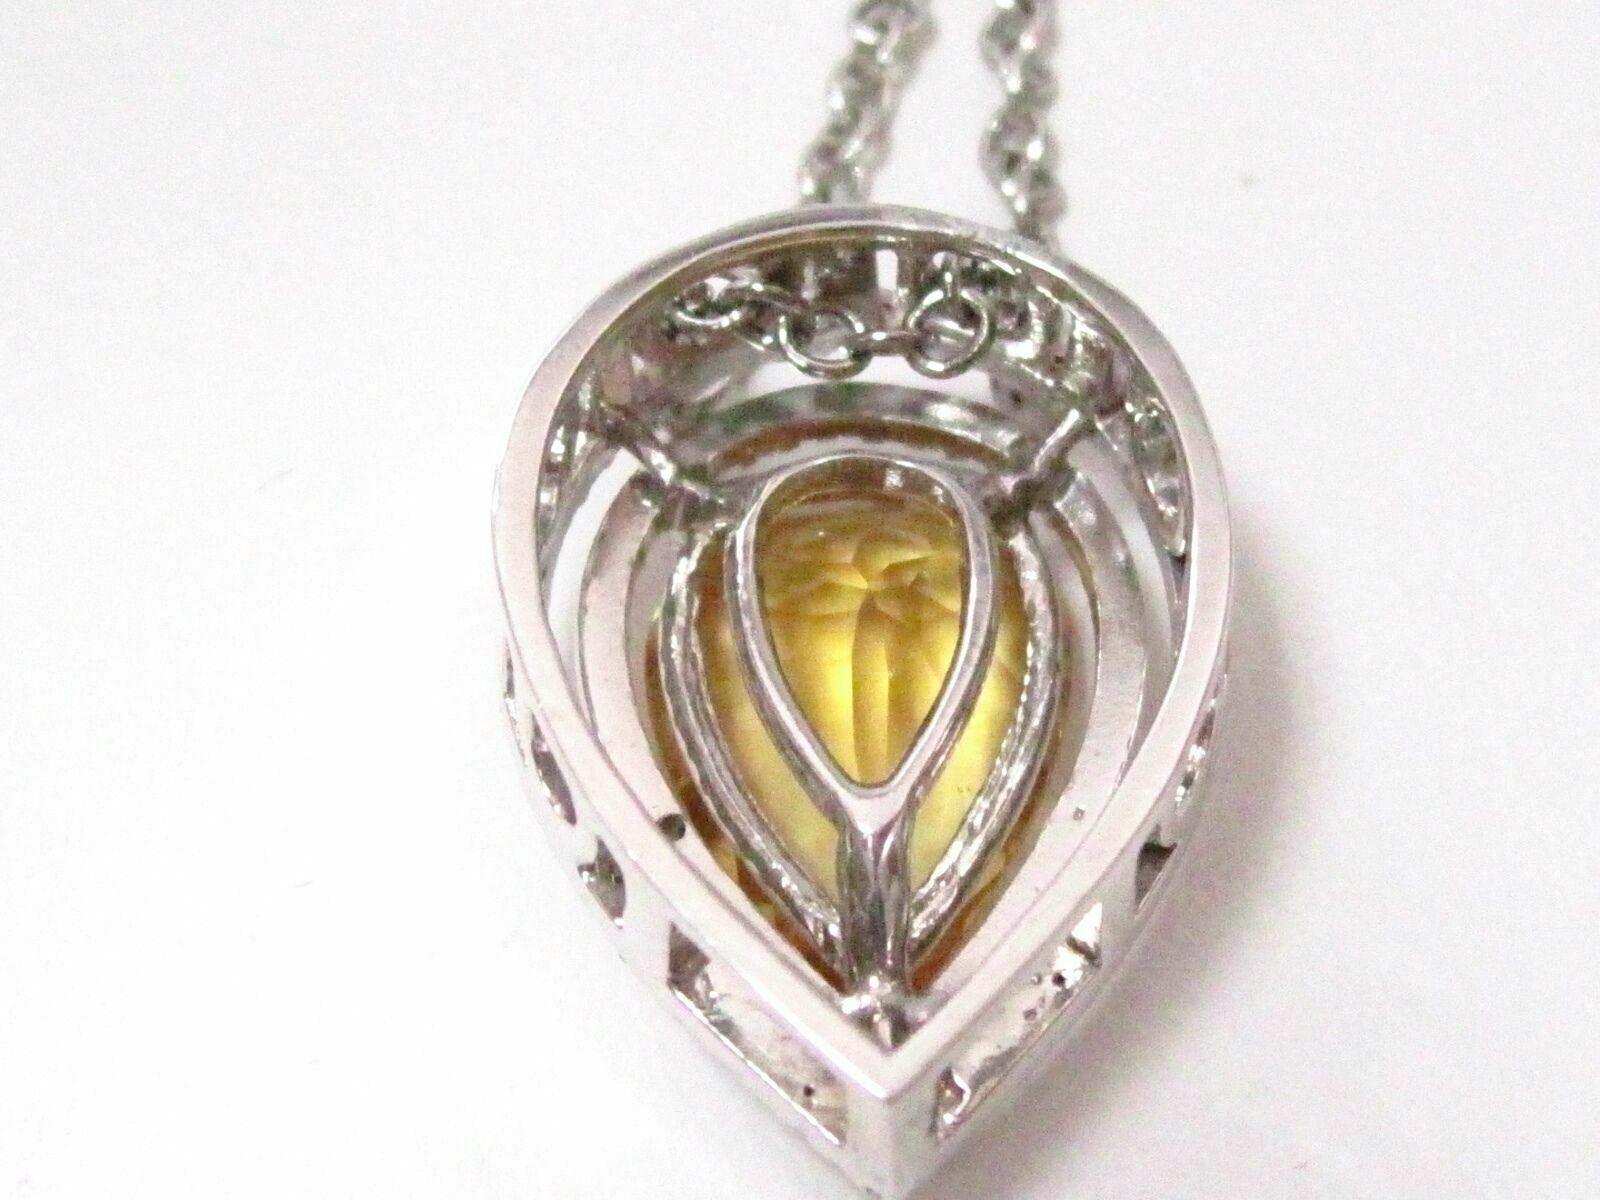 Fine 7.58Ct Natural Pear Citrine Gem & Diamond Pendant Necklace 14k White Gold